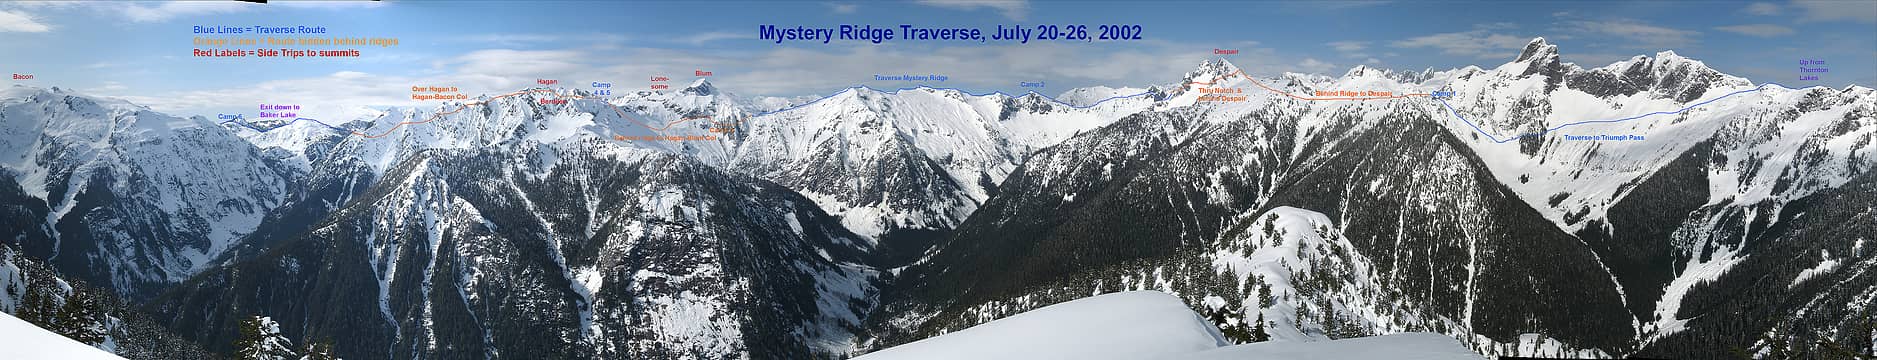 Mystery Ridge Traverse 2002